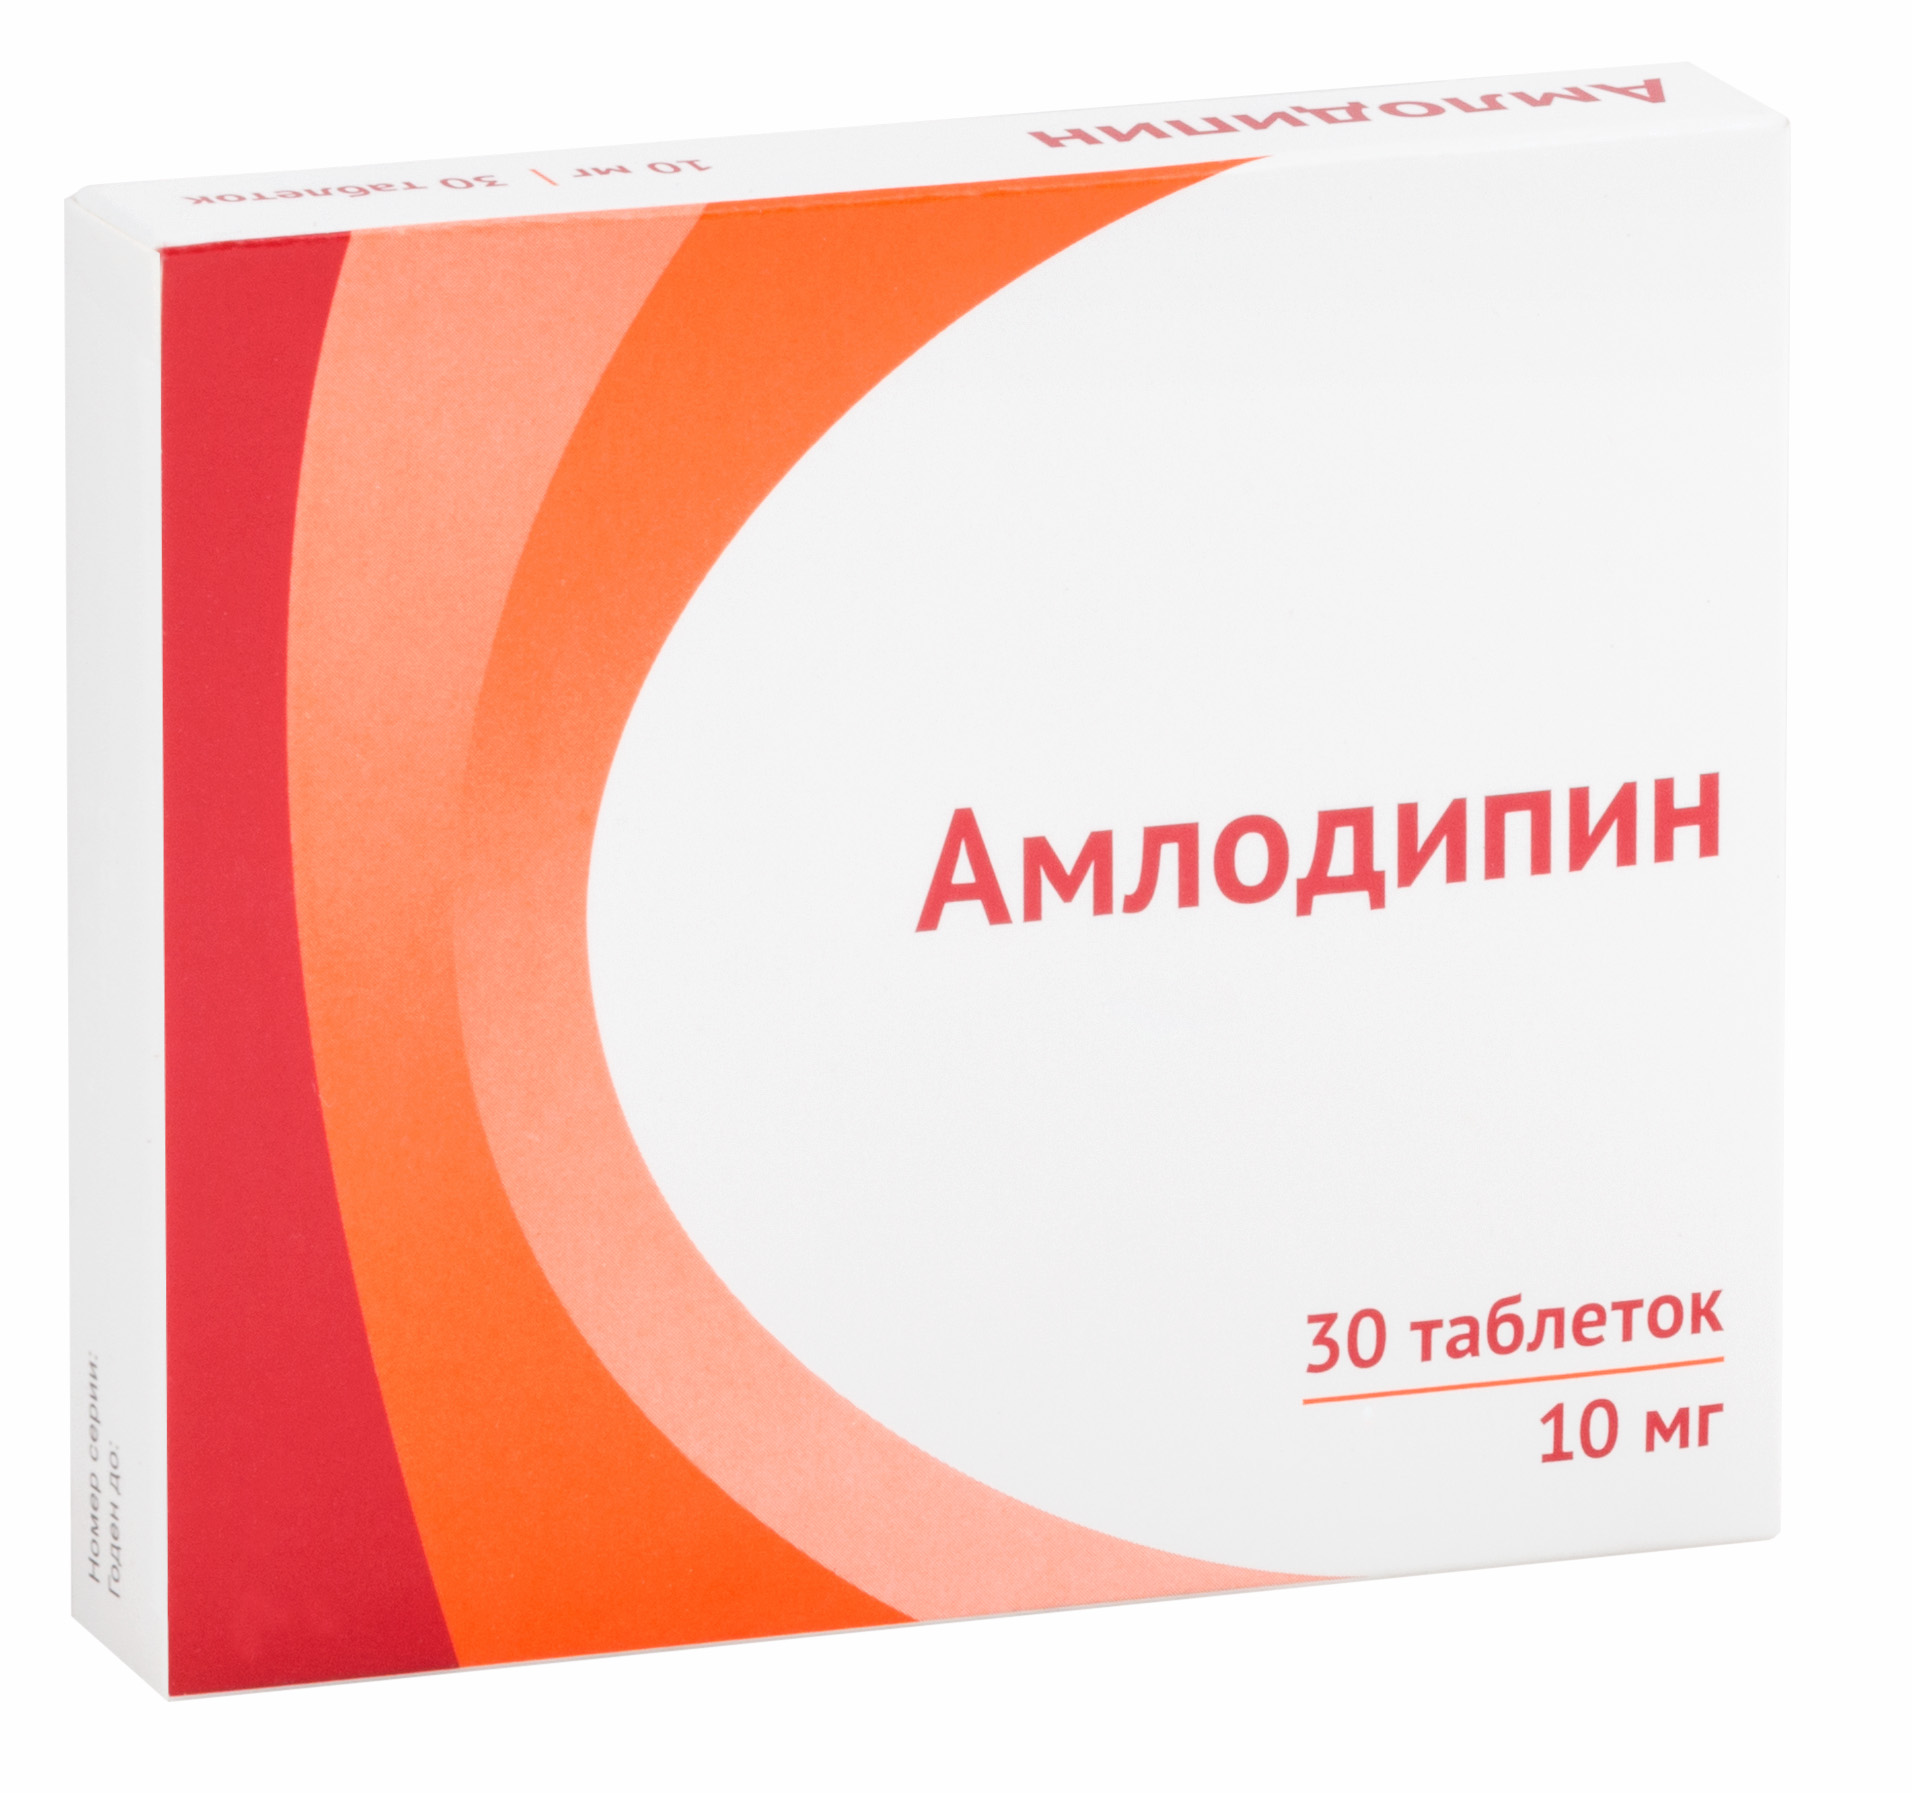 Aptekirls :: Амлодипин таблетки 10мг №30 Озон — заказать онлайн и .